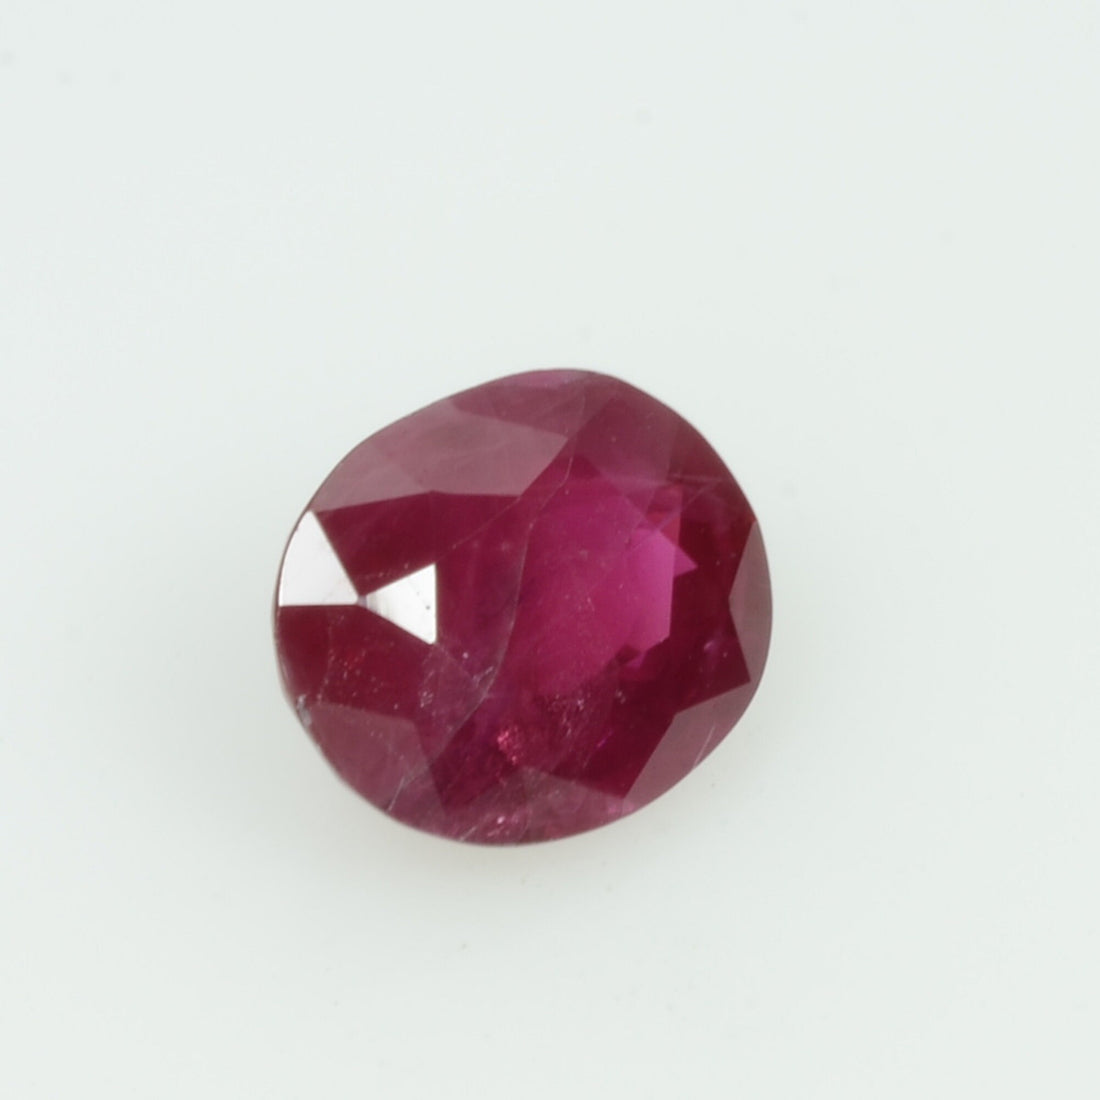 0.80 cts Natural Burma Ruby Loose Gemstone Oval Cut